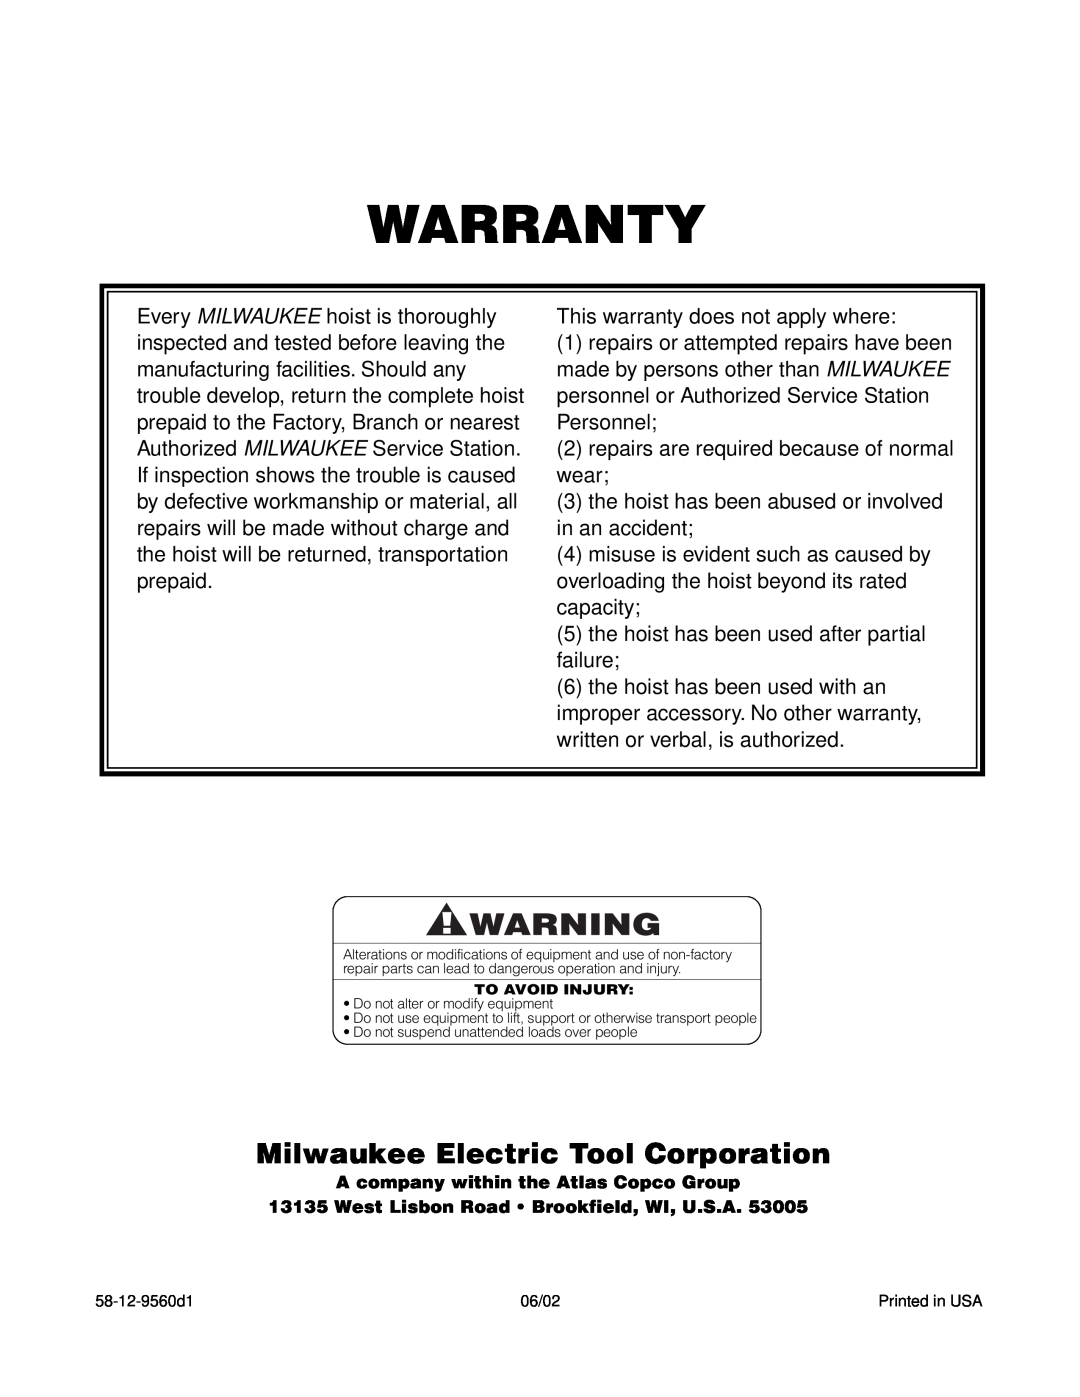 Milwaukee 9571, 9572, 9573, 9568, 9570, 9565, 9560, 9561, 9567, 9566, 9562 manual Milwaukee Electric Tool Corporation, Warranty 